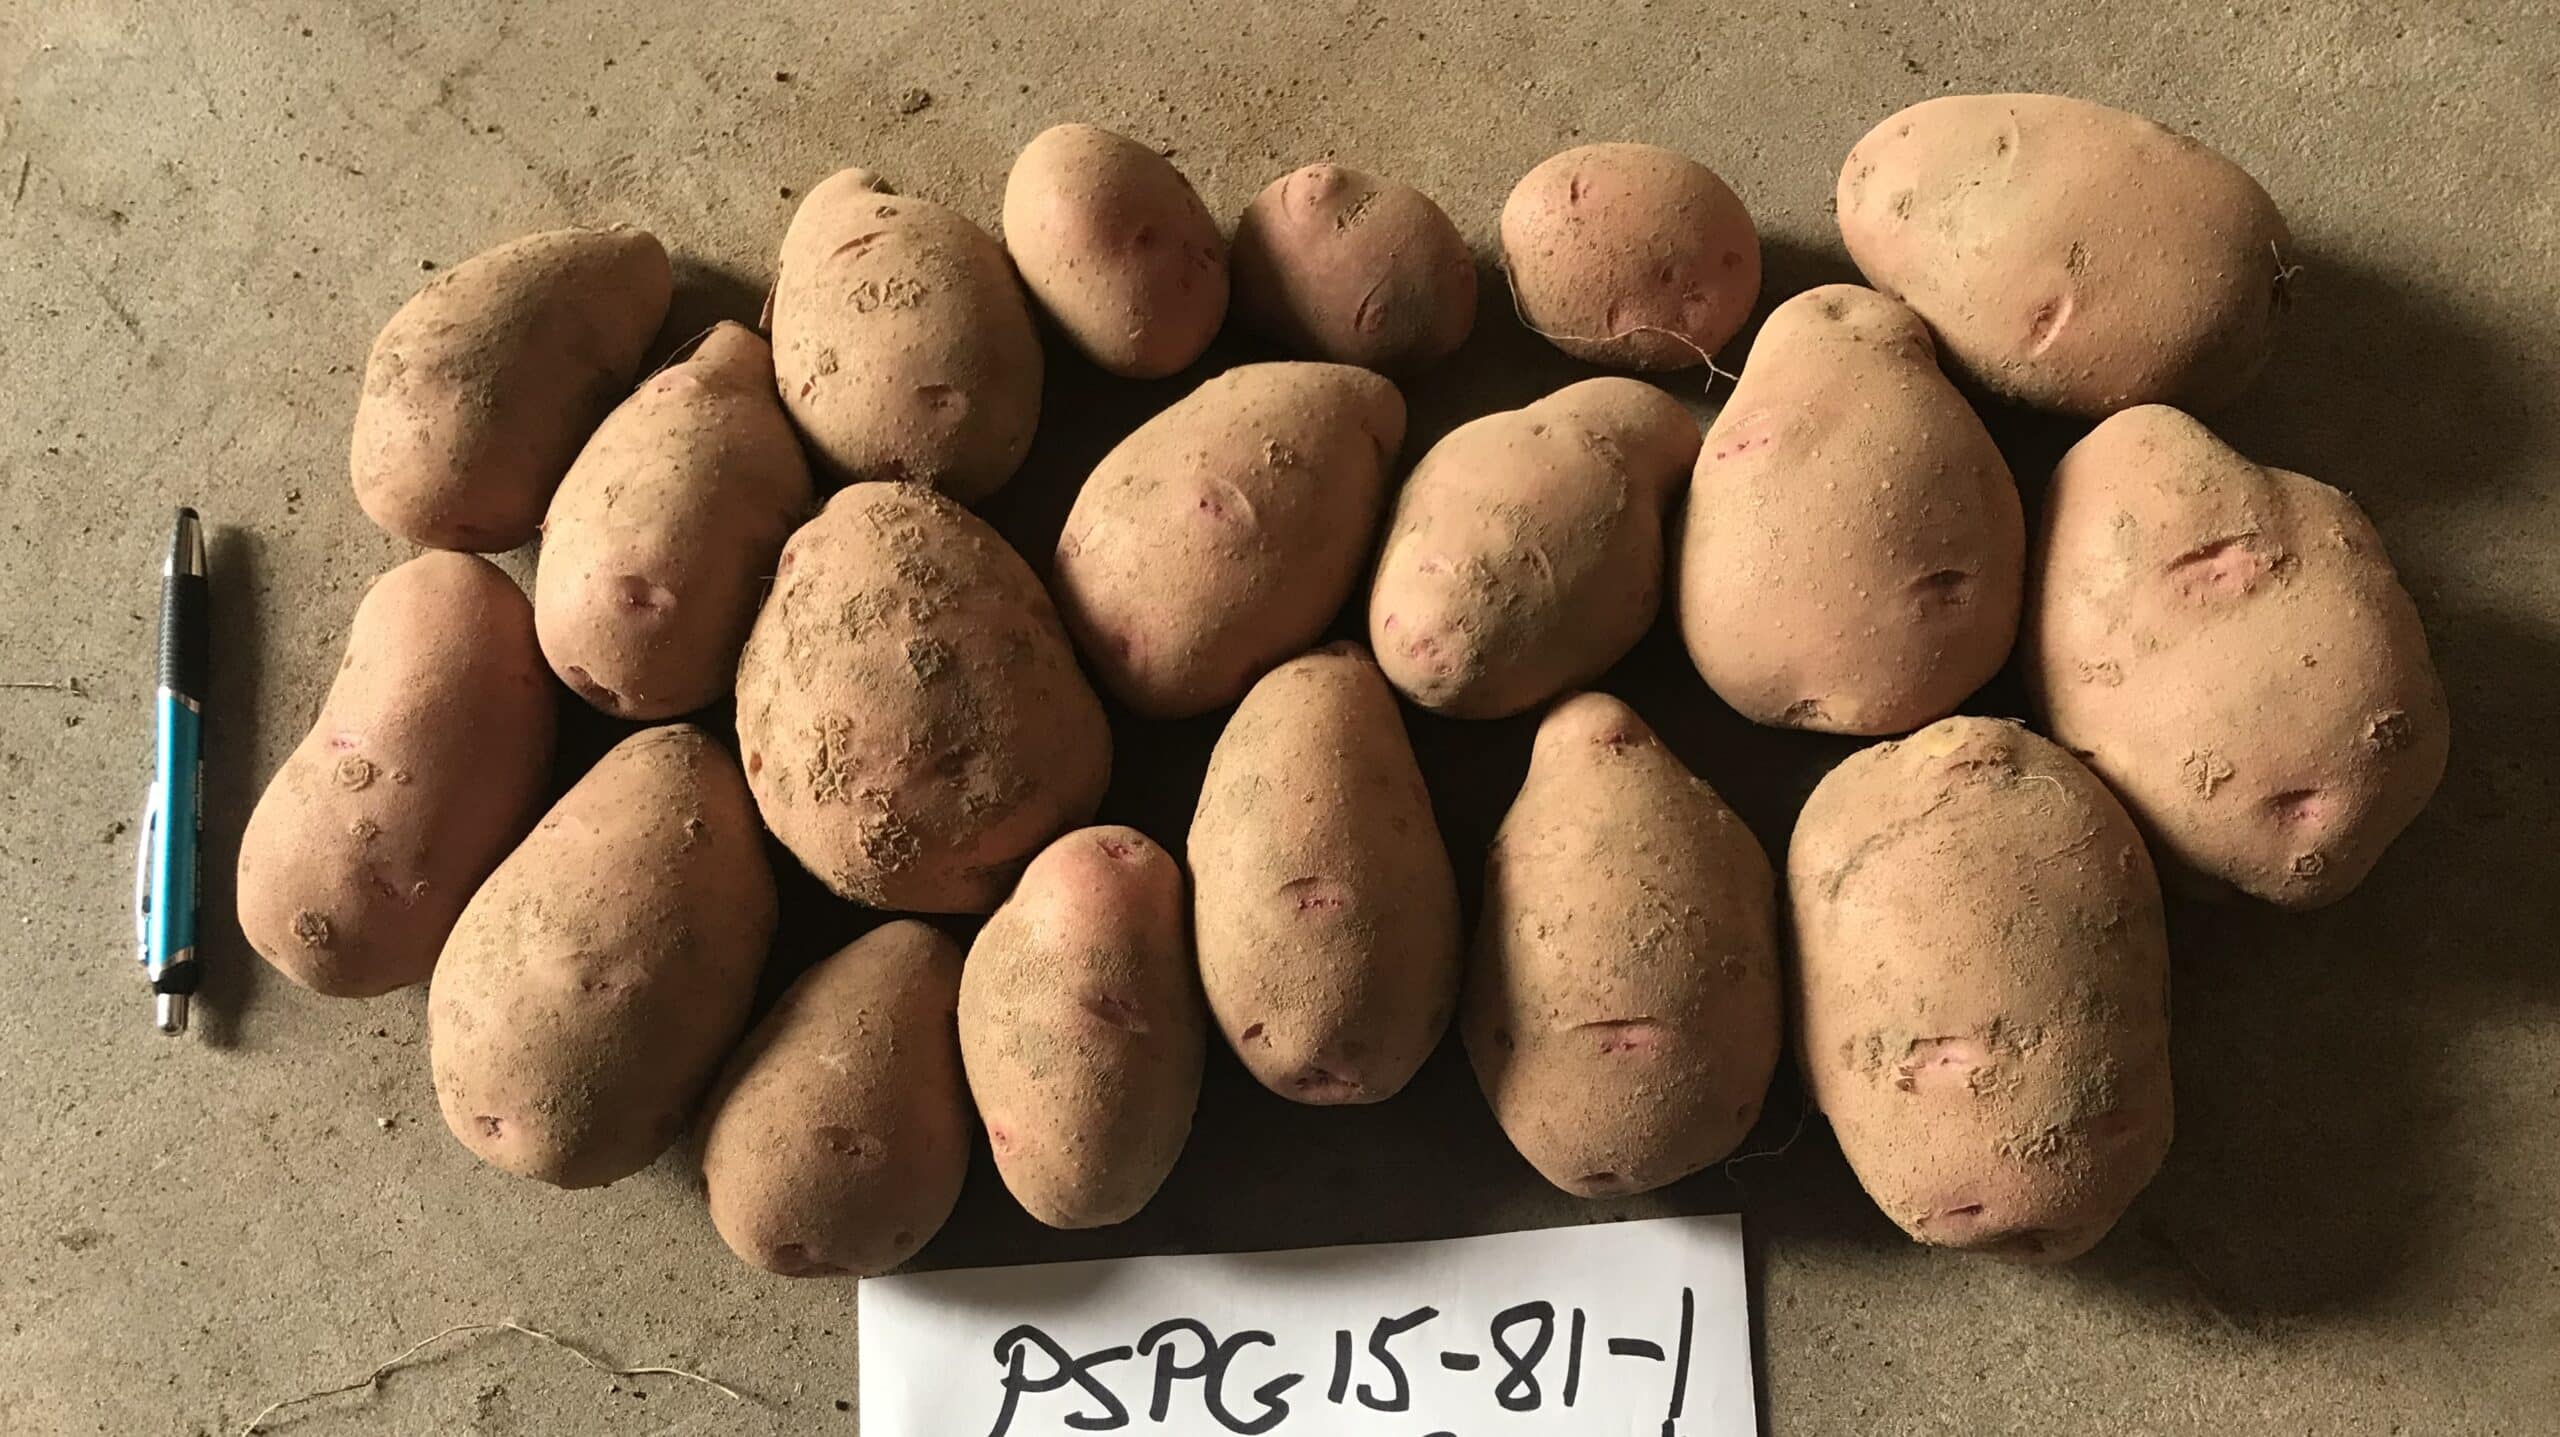 Organic potatoes at Kroeker Farms